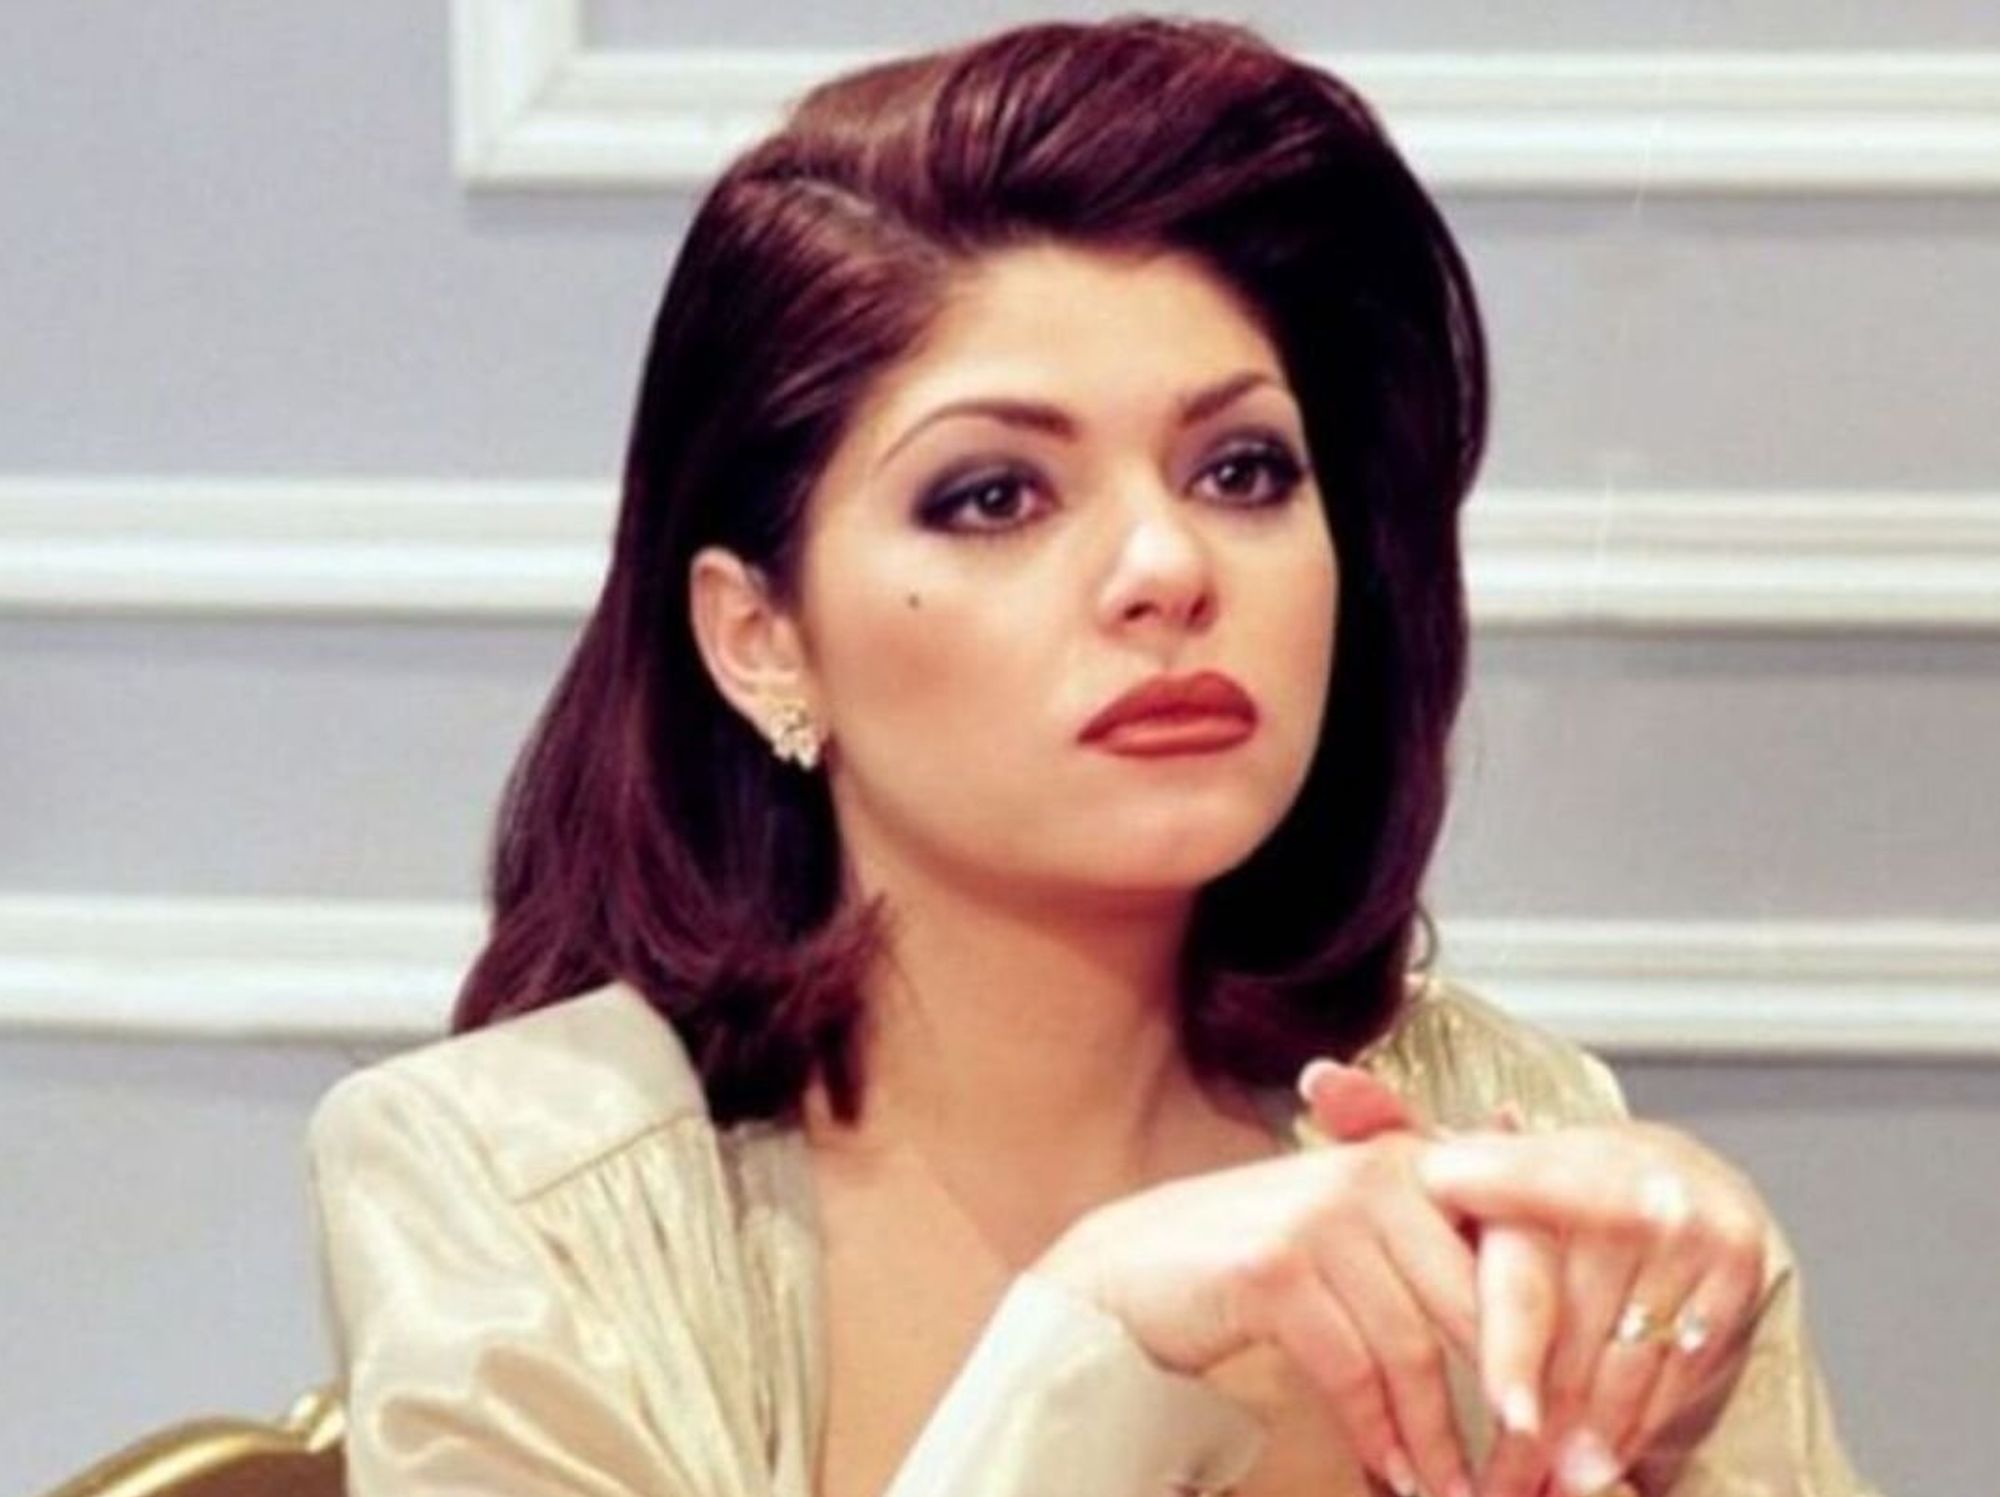 Villain Soraya Montenegro character in the Latin American soap opera "Mar\u00eda la del Barrio"